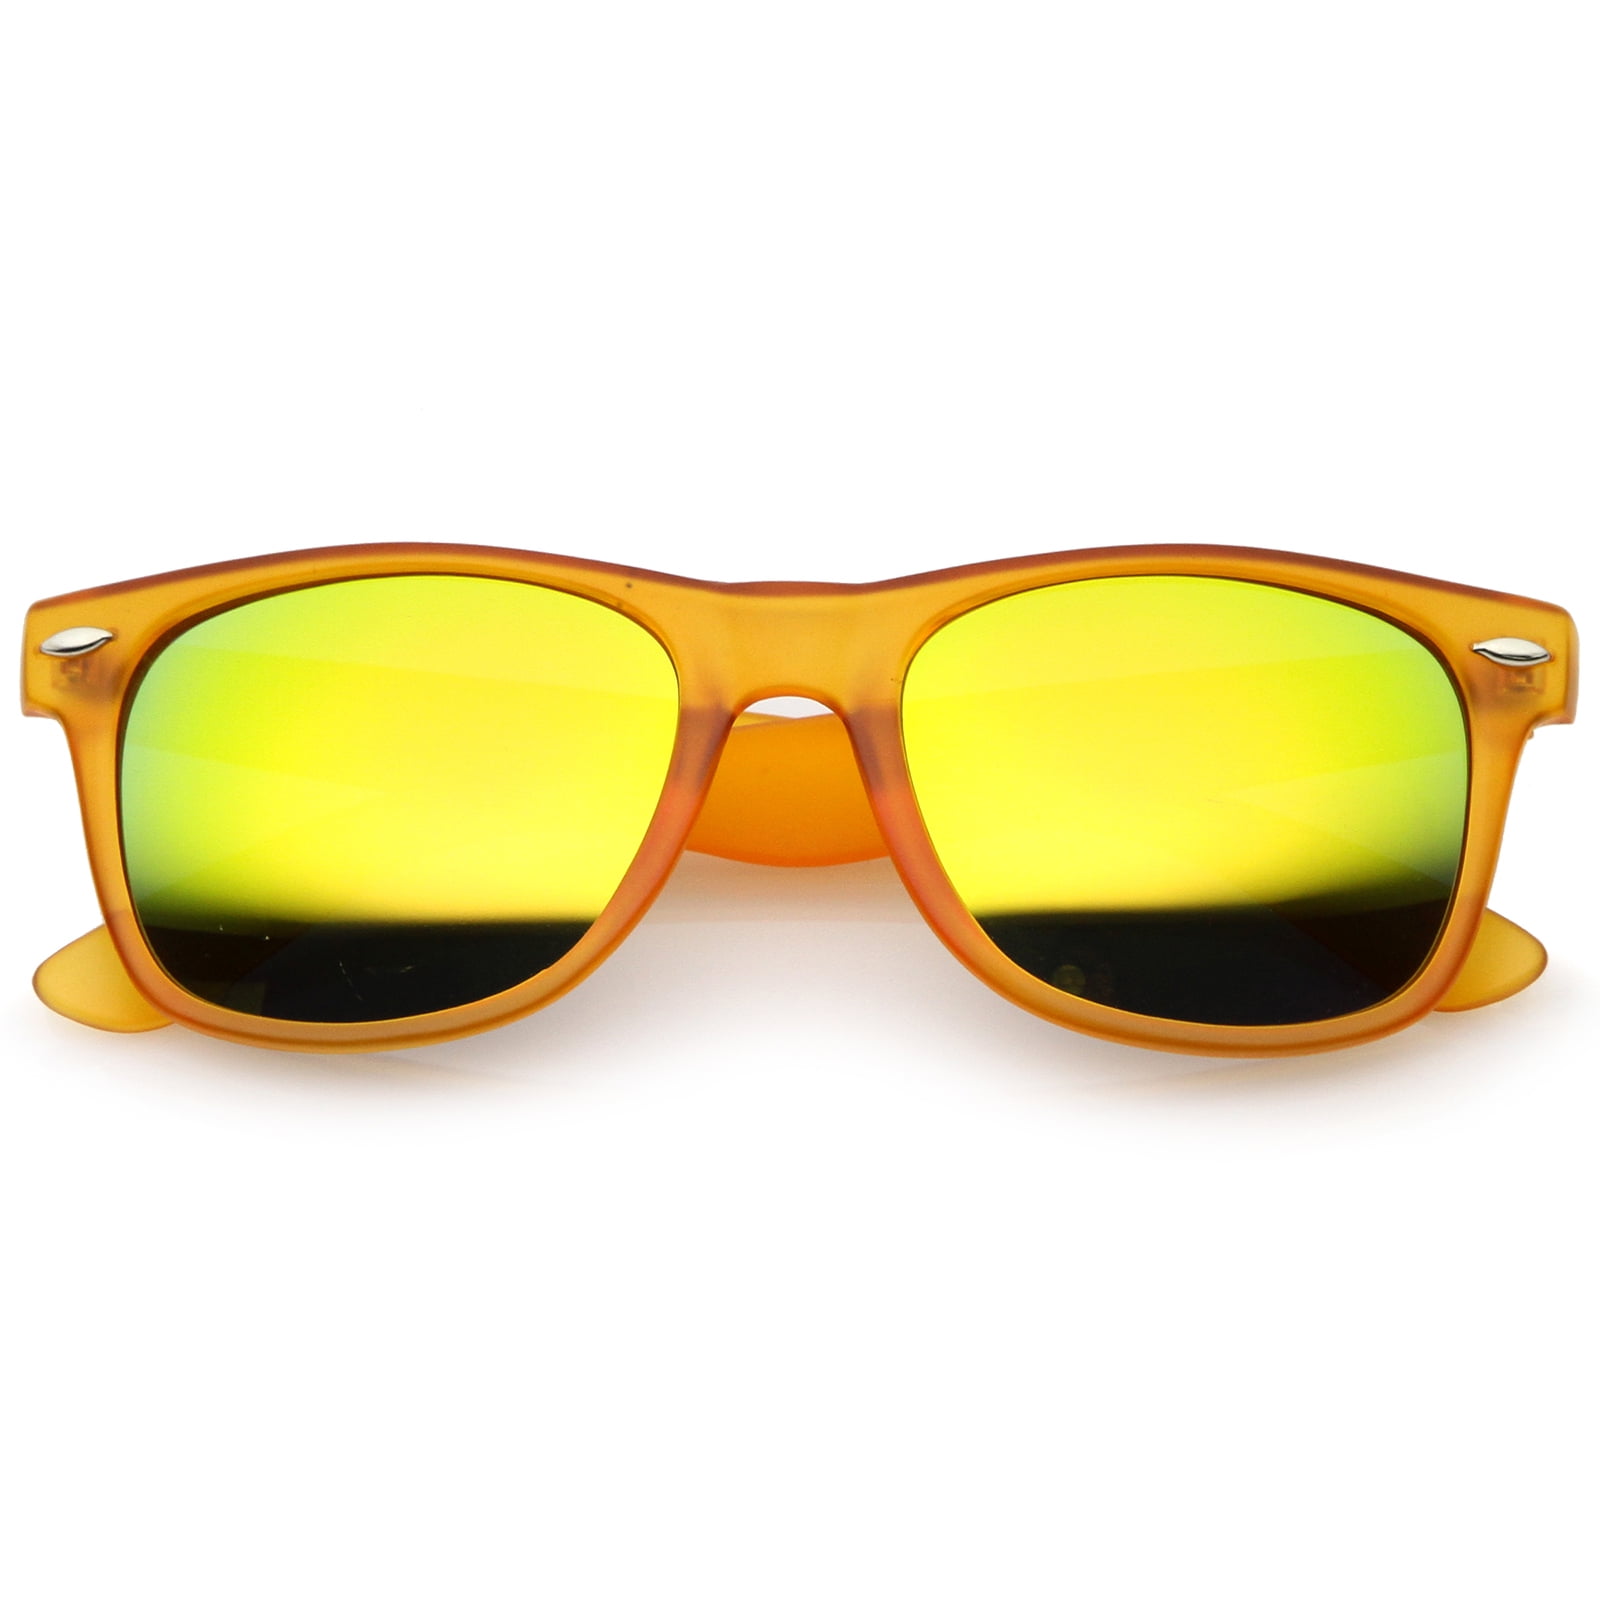 Gloss blue with yellow mirror lens horned rim sunglasses retro vingtage 